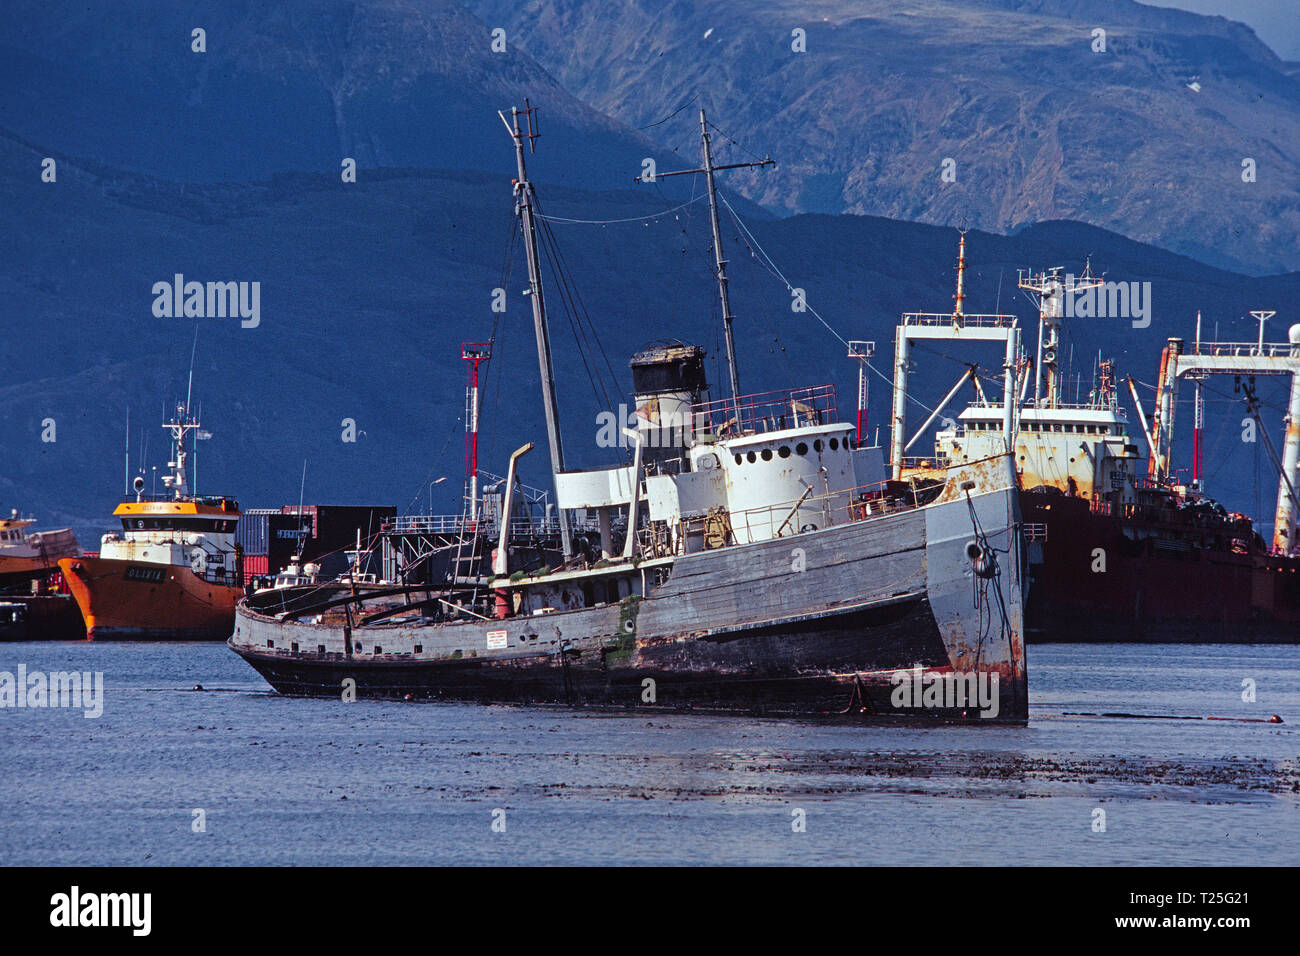 Dilapitated old wooden boat at Ushuaia harbor, Ushuaia, Tierra del Fuego, Patagonia, Argentina Stock Photo